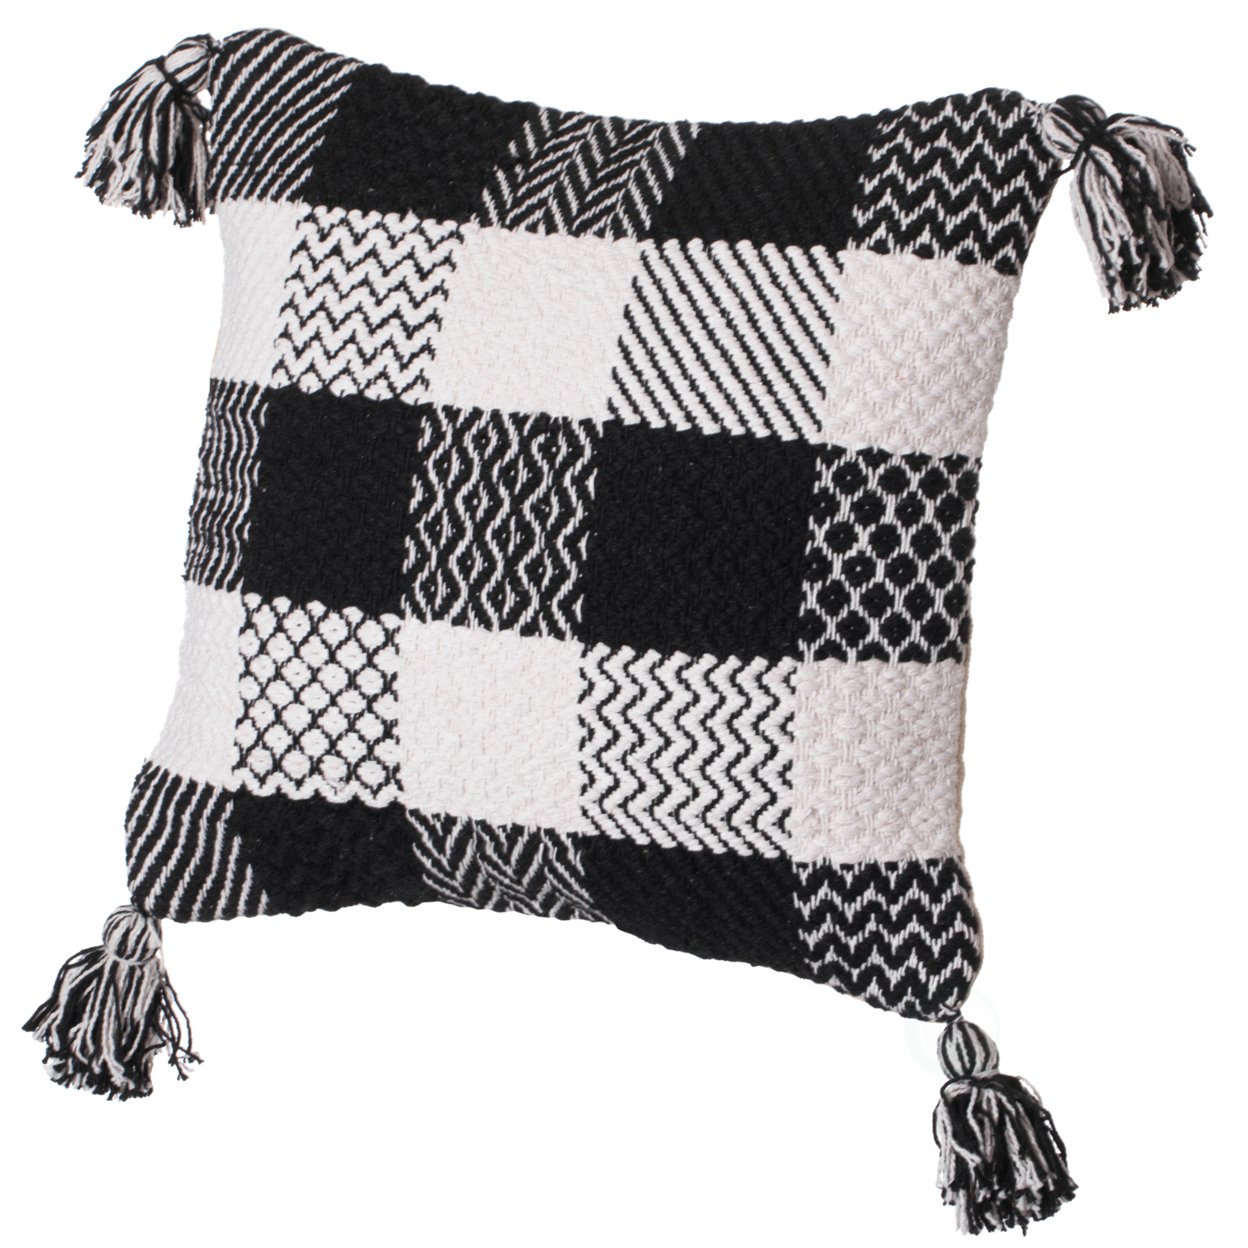 16 Handwoven Cotton Throw Pillow Cover Chevron & Gingham Design Black & White - Gingham